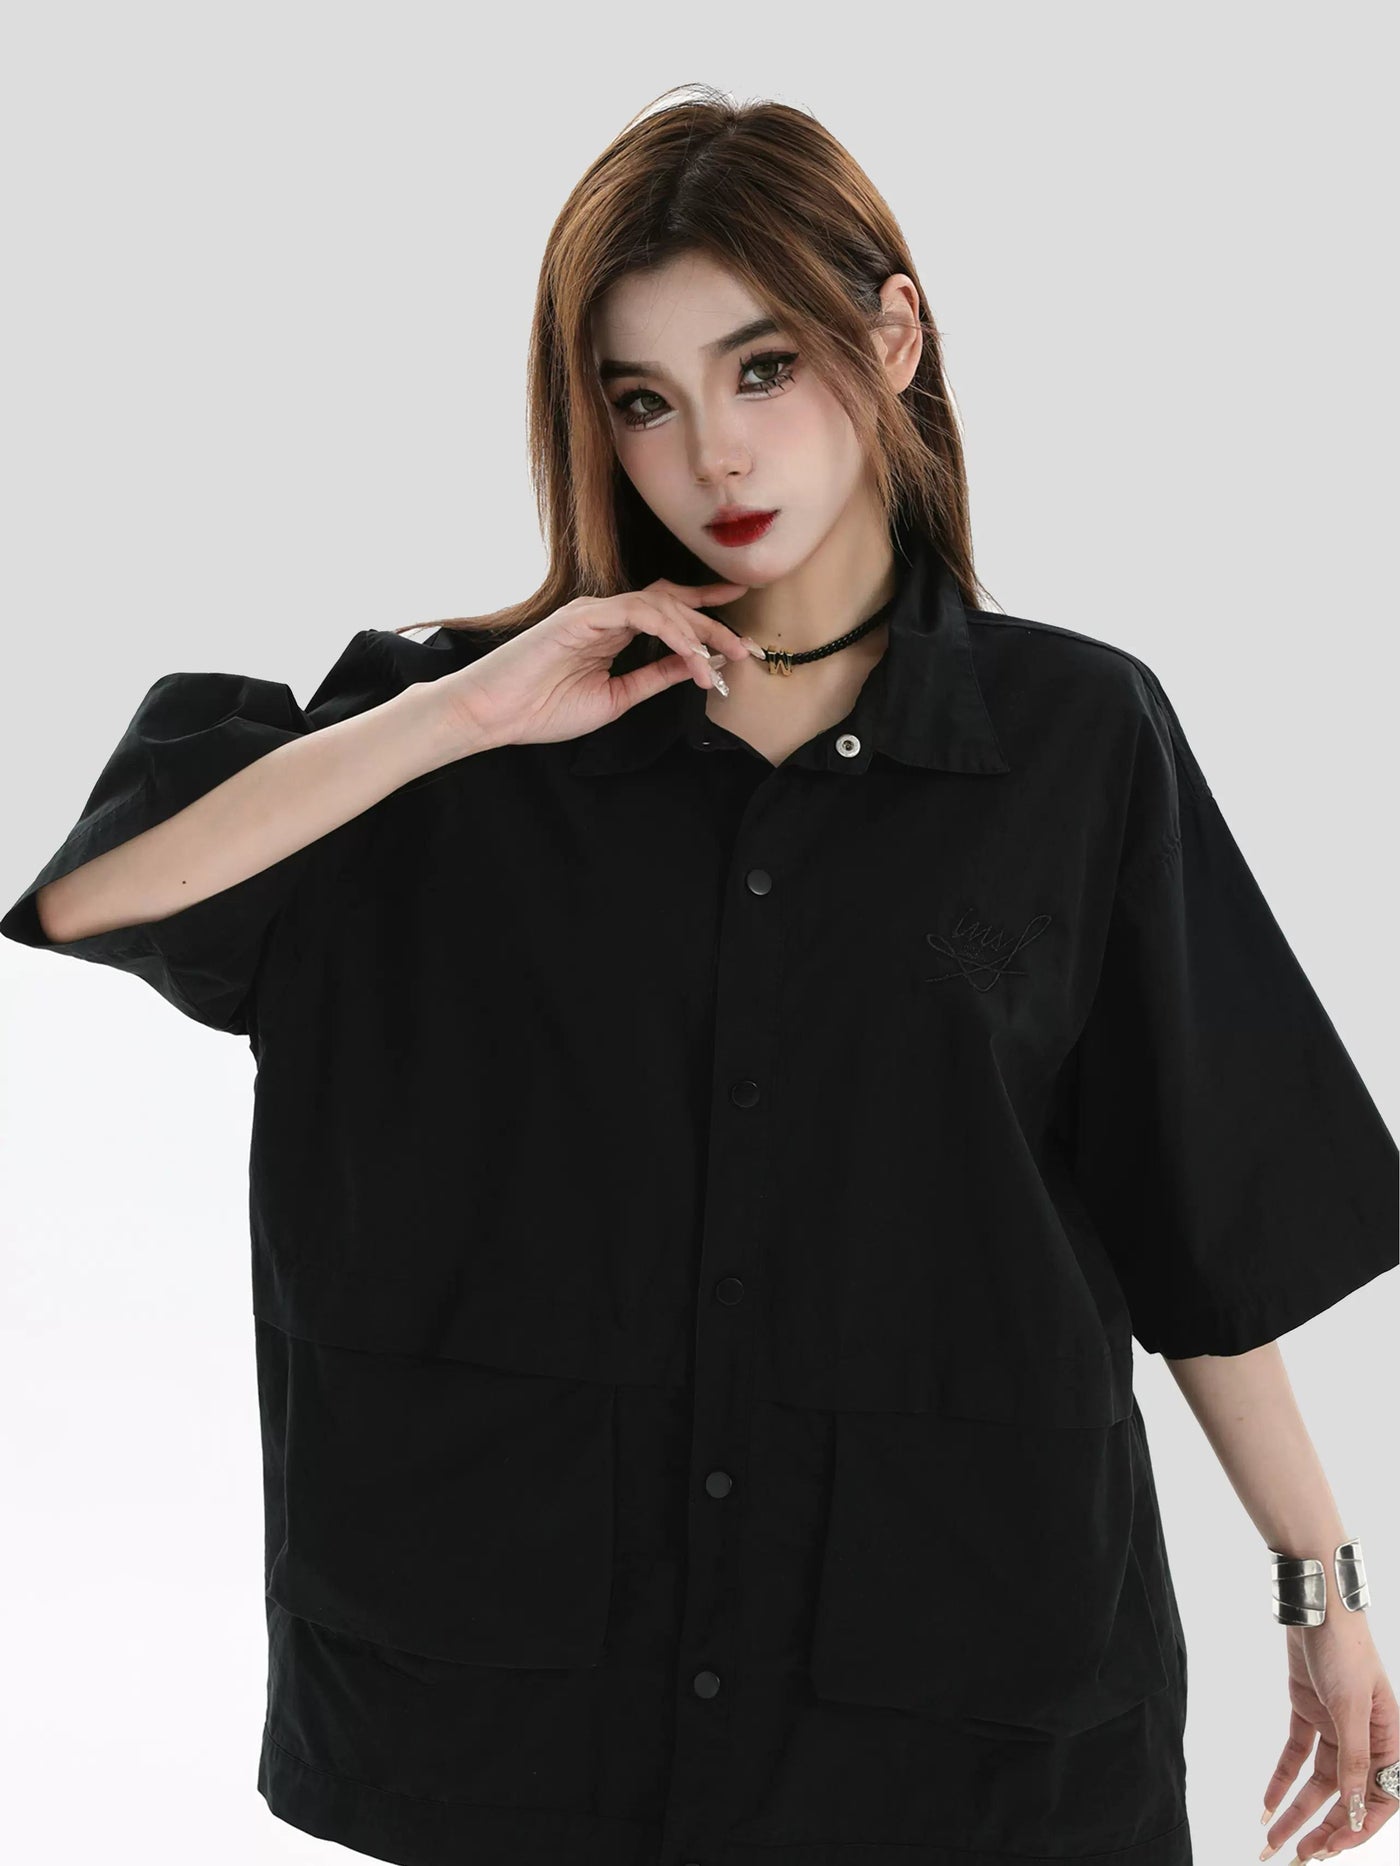 Wide Front Pocket Shirt Korean Street Fashion Shirt By INS Korea Shop Online at OH Vault